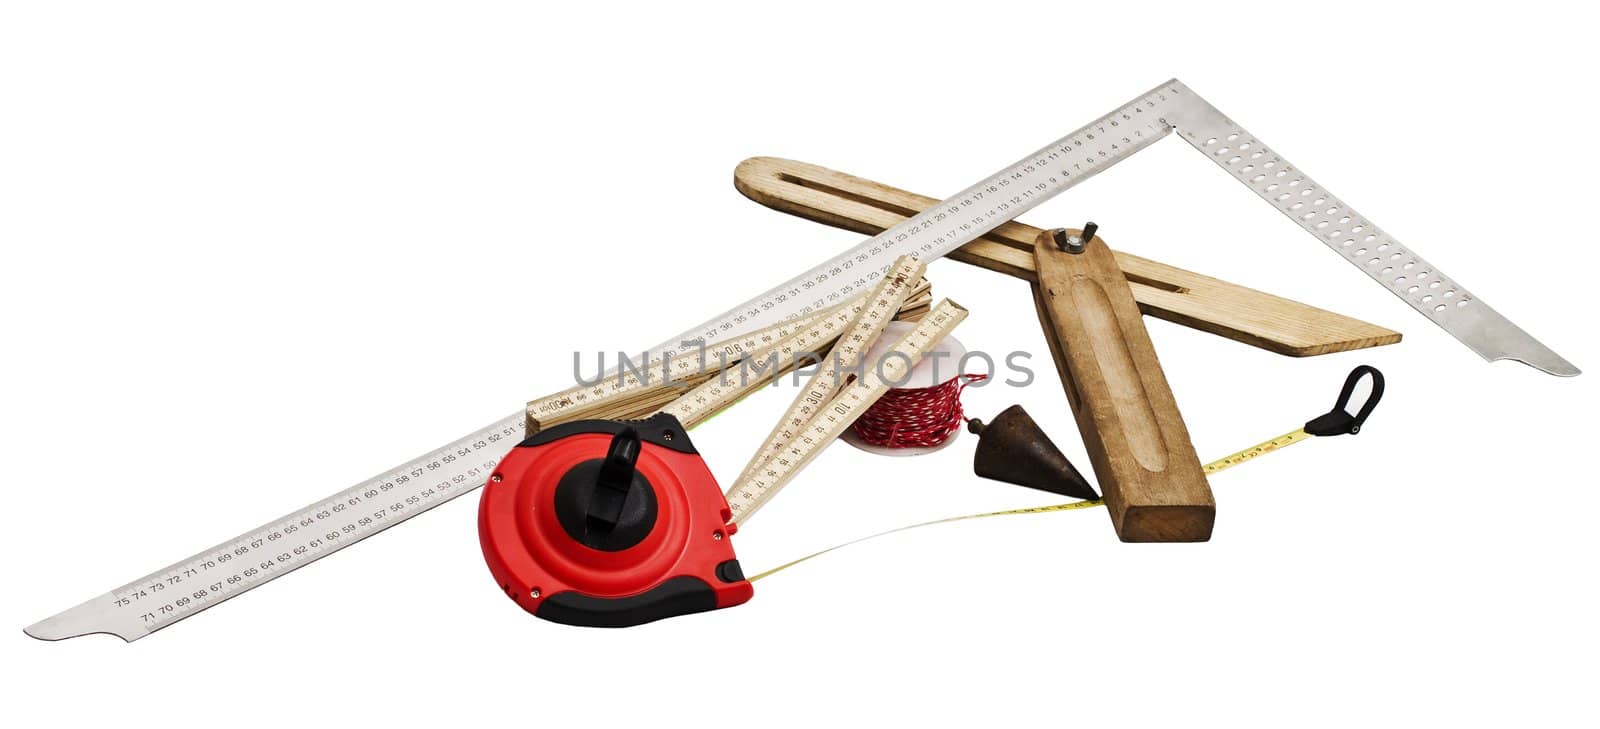 carpenters tools on white background. measuring tape, bevel, plumb bob, angle bracket, folding rule